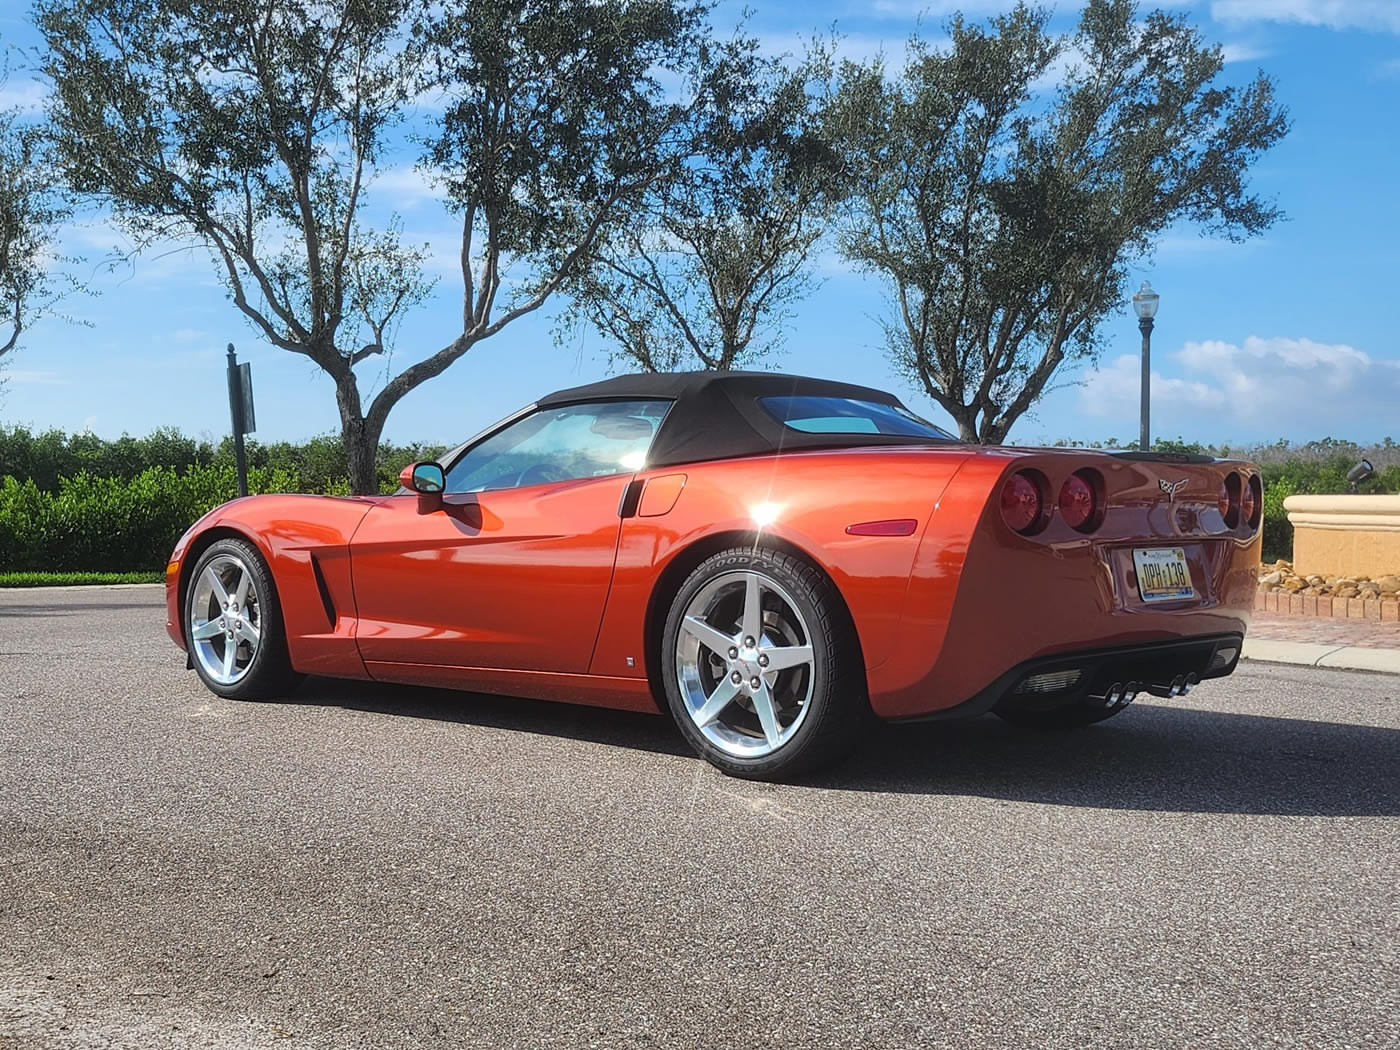 2006 Corvette 3LT Convertible in Daytona Sunset Orange Metallic